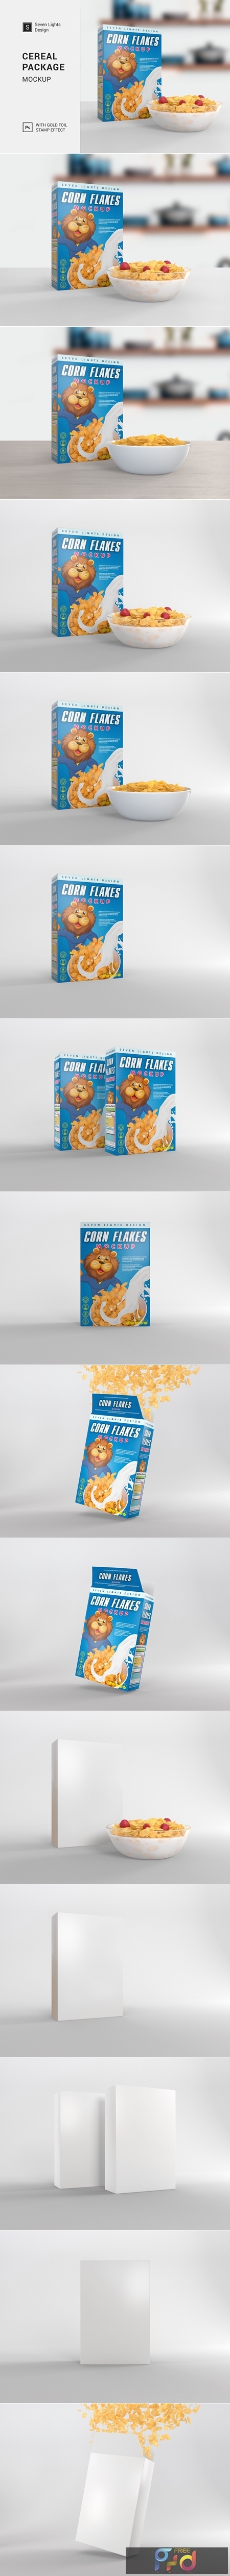 Cereal Package Mockup